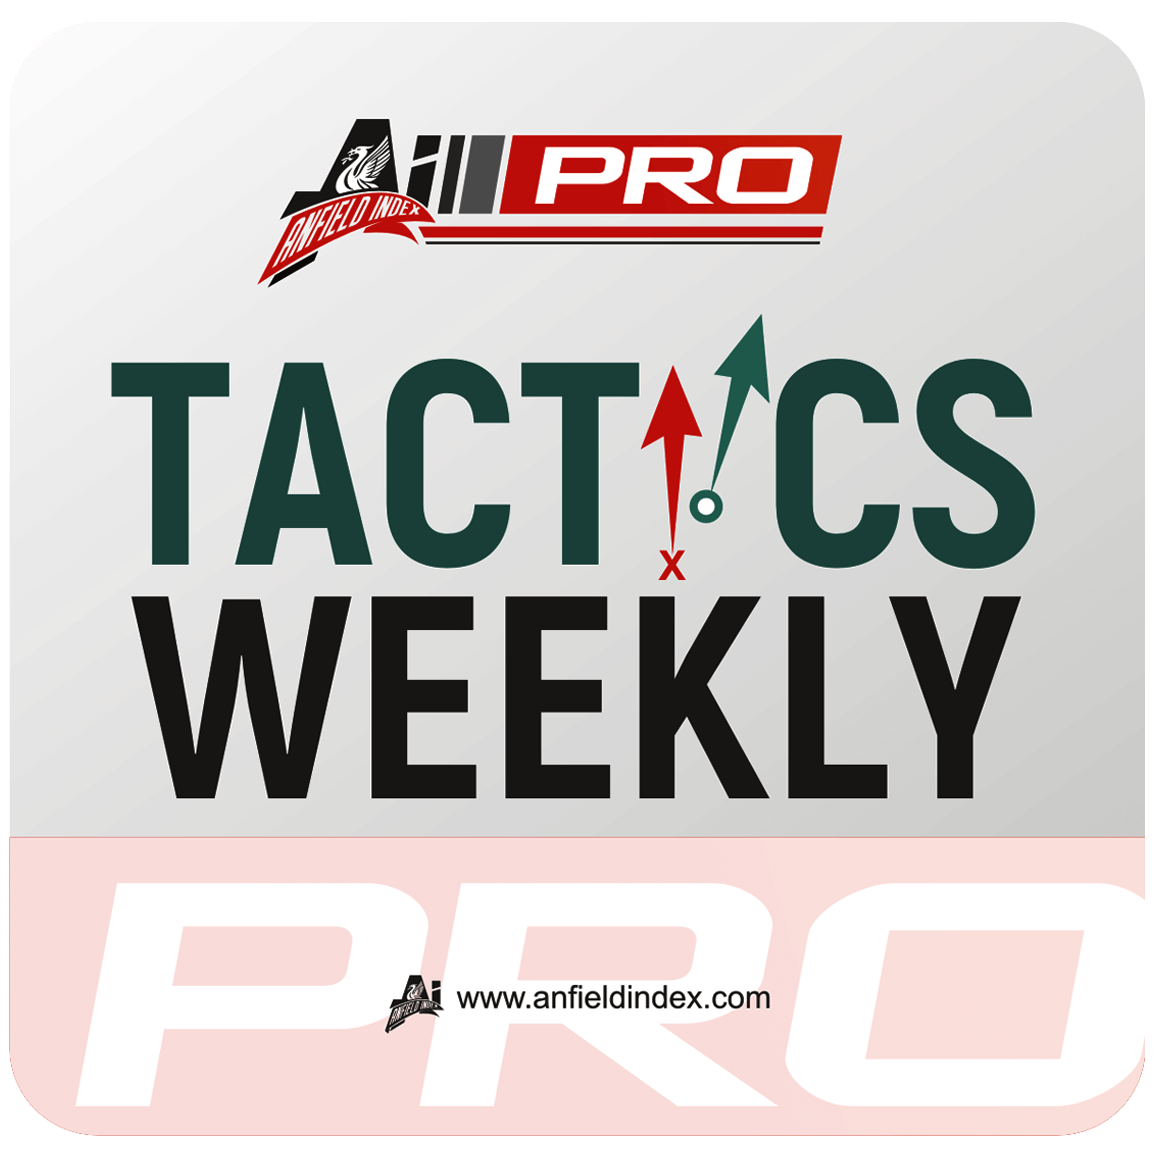 Tactics Weekly: A Detailed Tactical Analysis of Fabinho and Keita